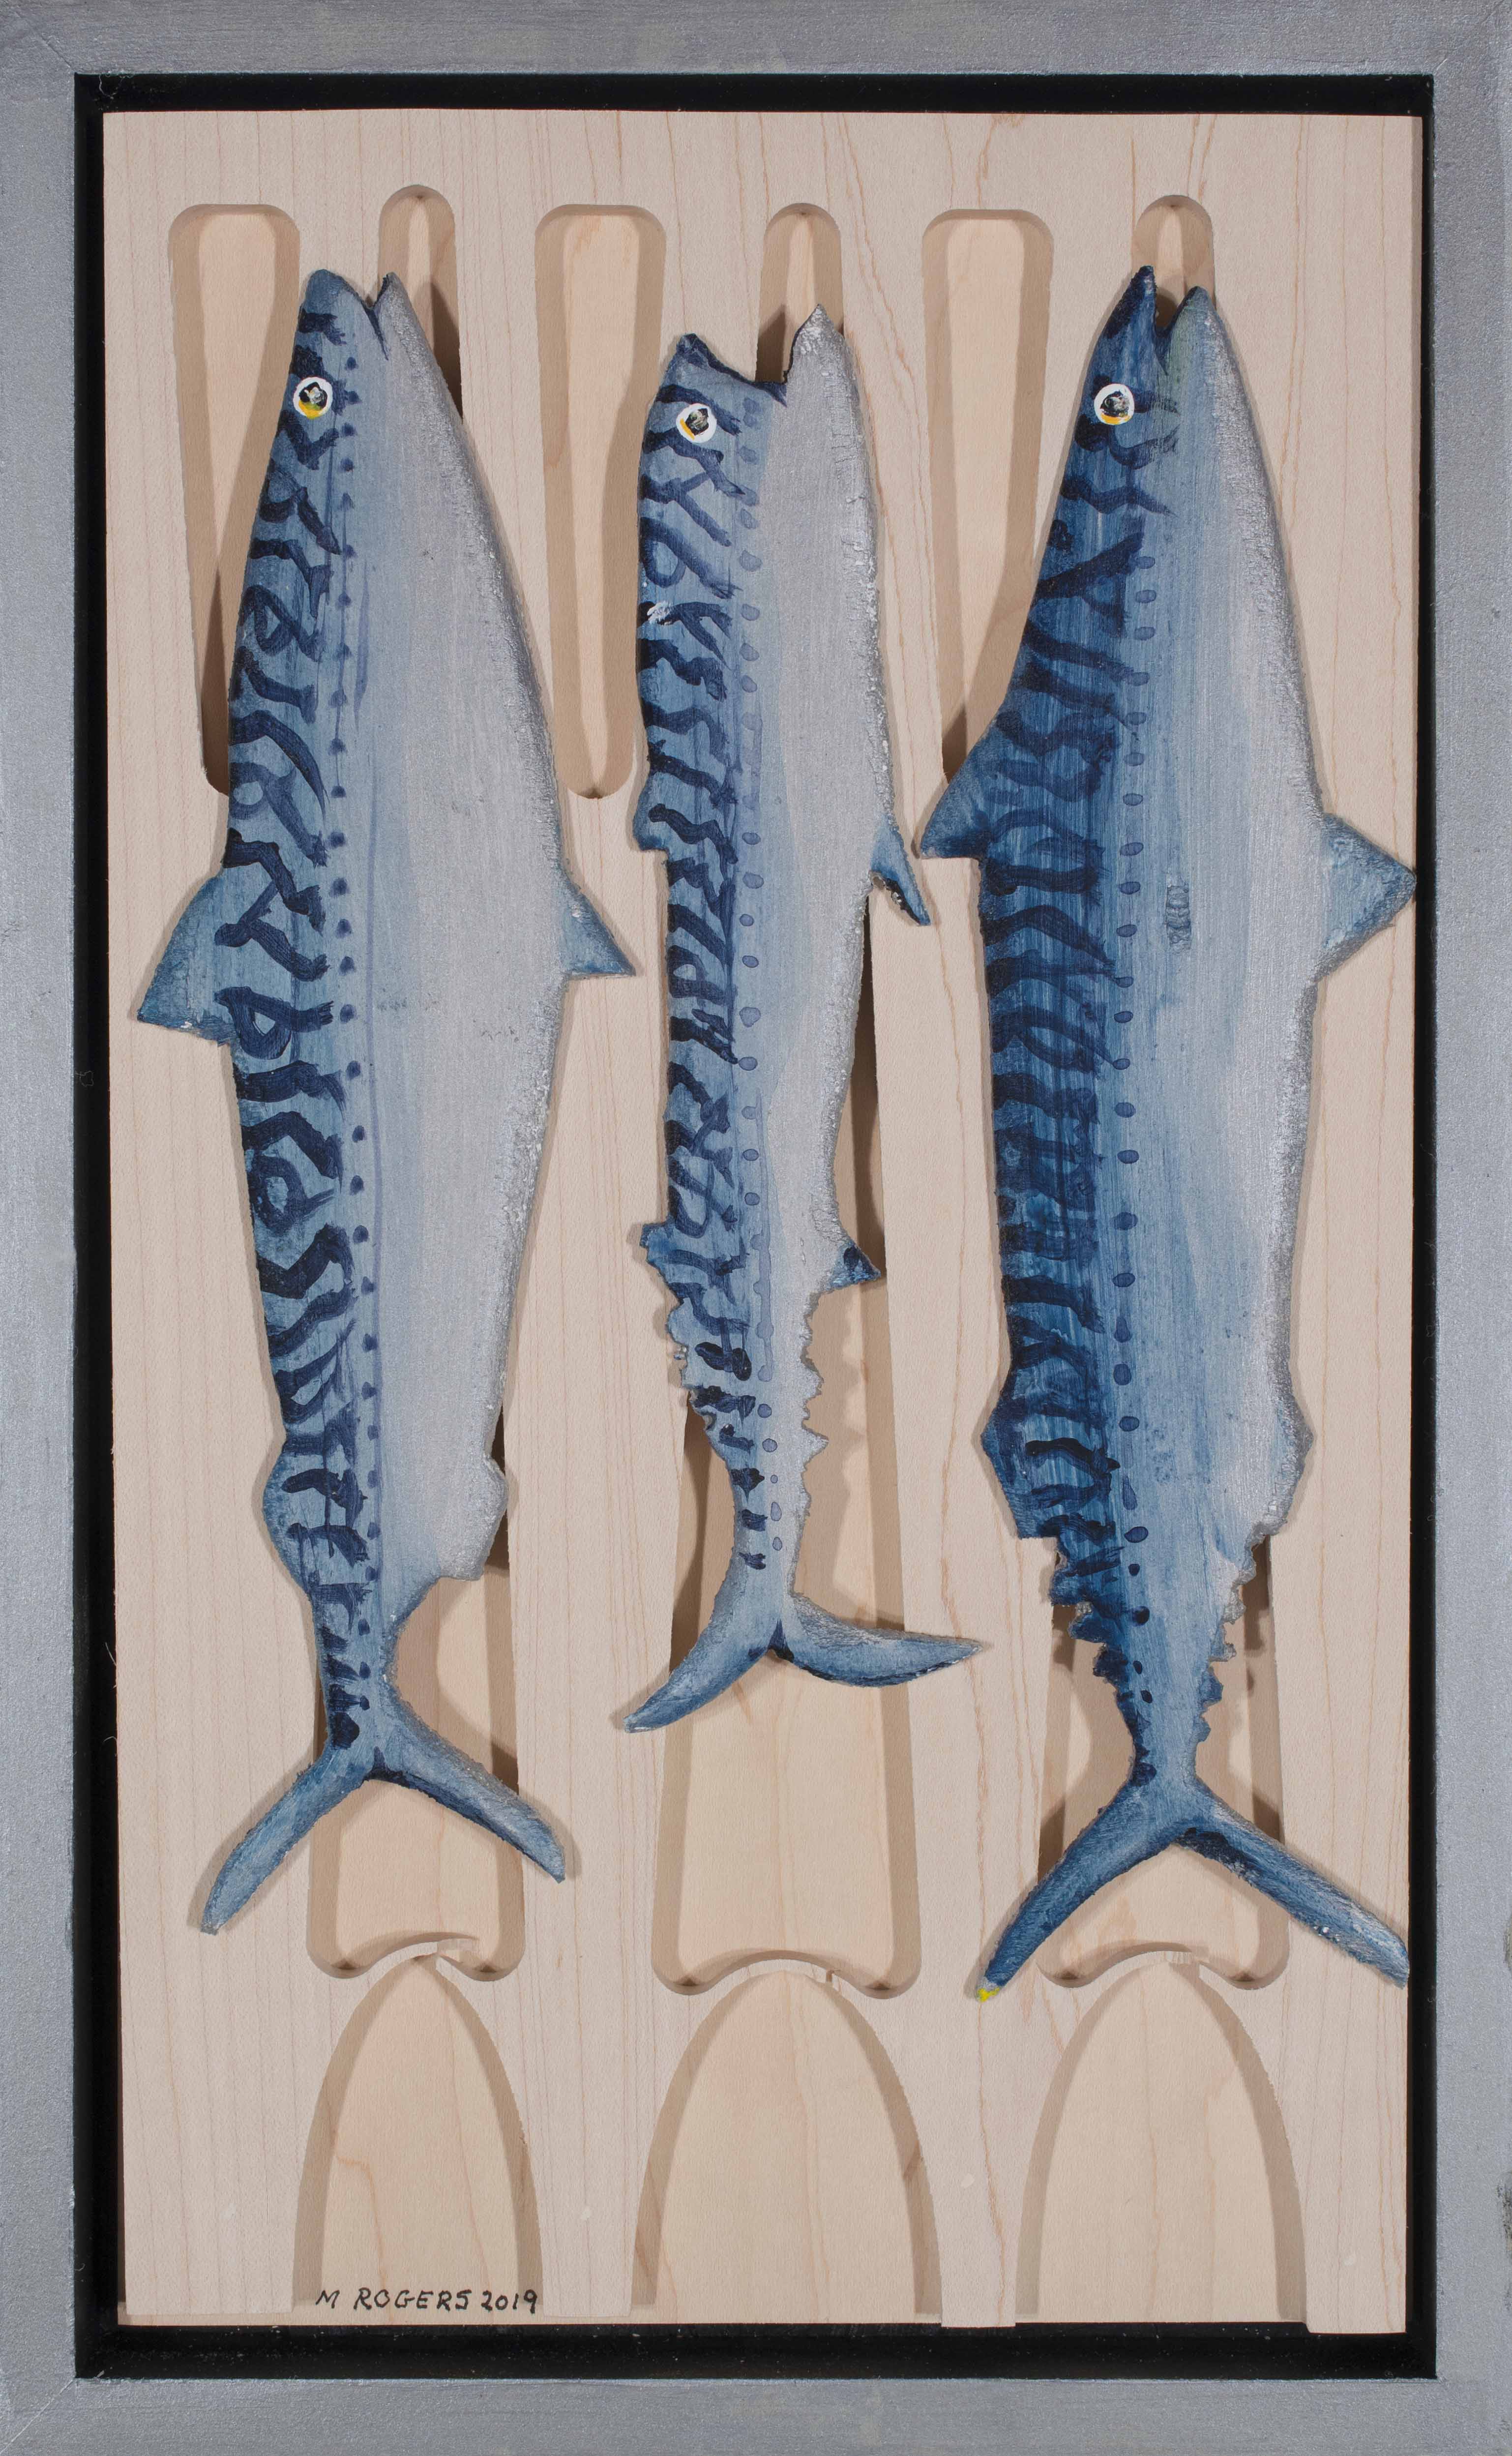 Mackerel, 2019, acrylic on wood, 15 x 9 inches